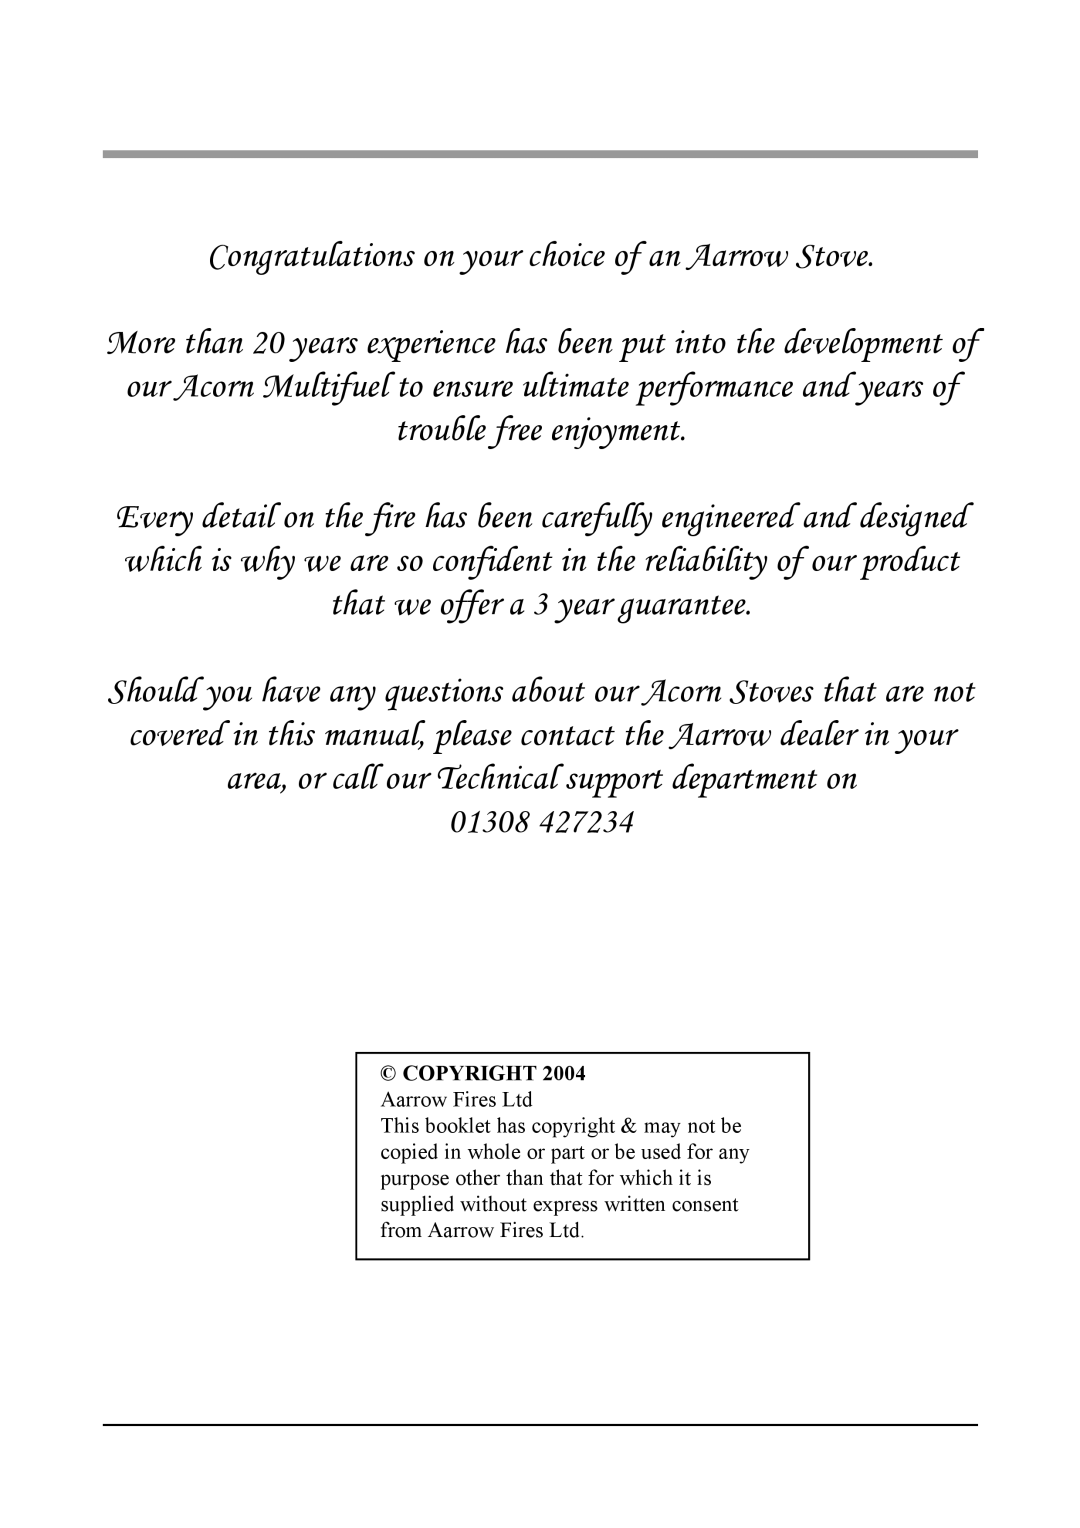 Aarrow Fires 4 installation manual Congratulations on your choice of an Aarrow Stove 